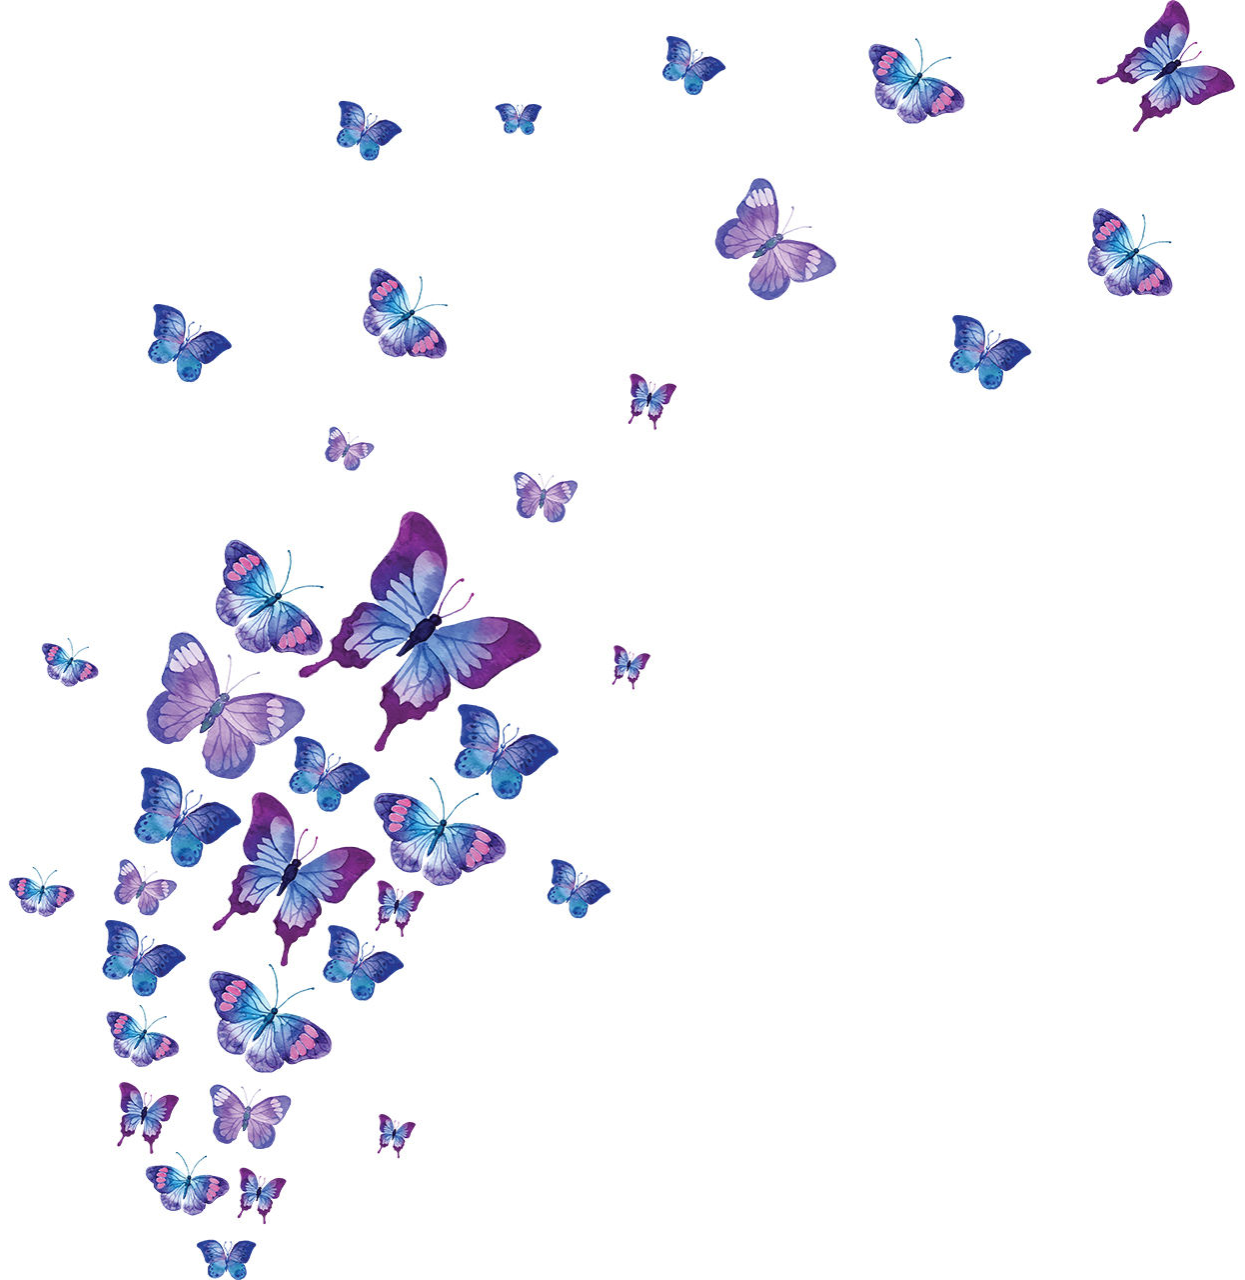 برچسب -استیکر- پوستر دیواری -صالسو آرت استیکر دیواری طرح blue butterfly saliپروانه های آبی